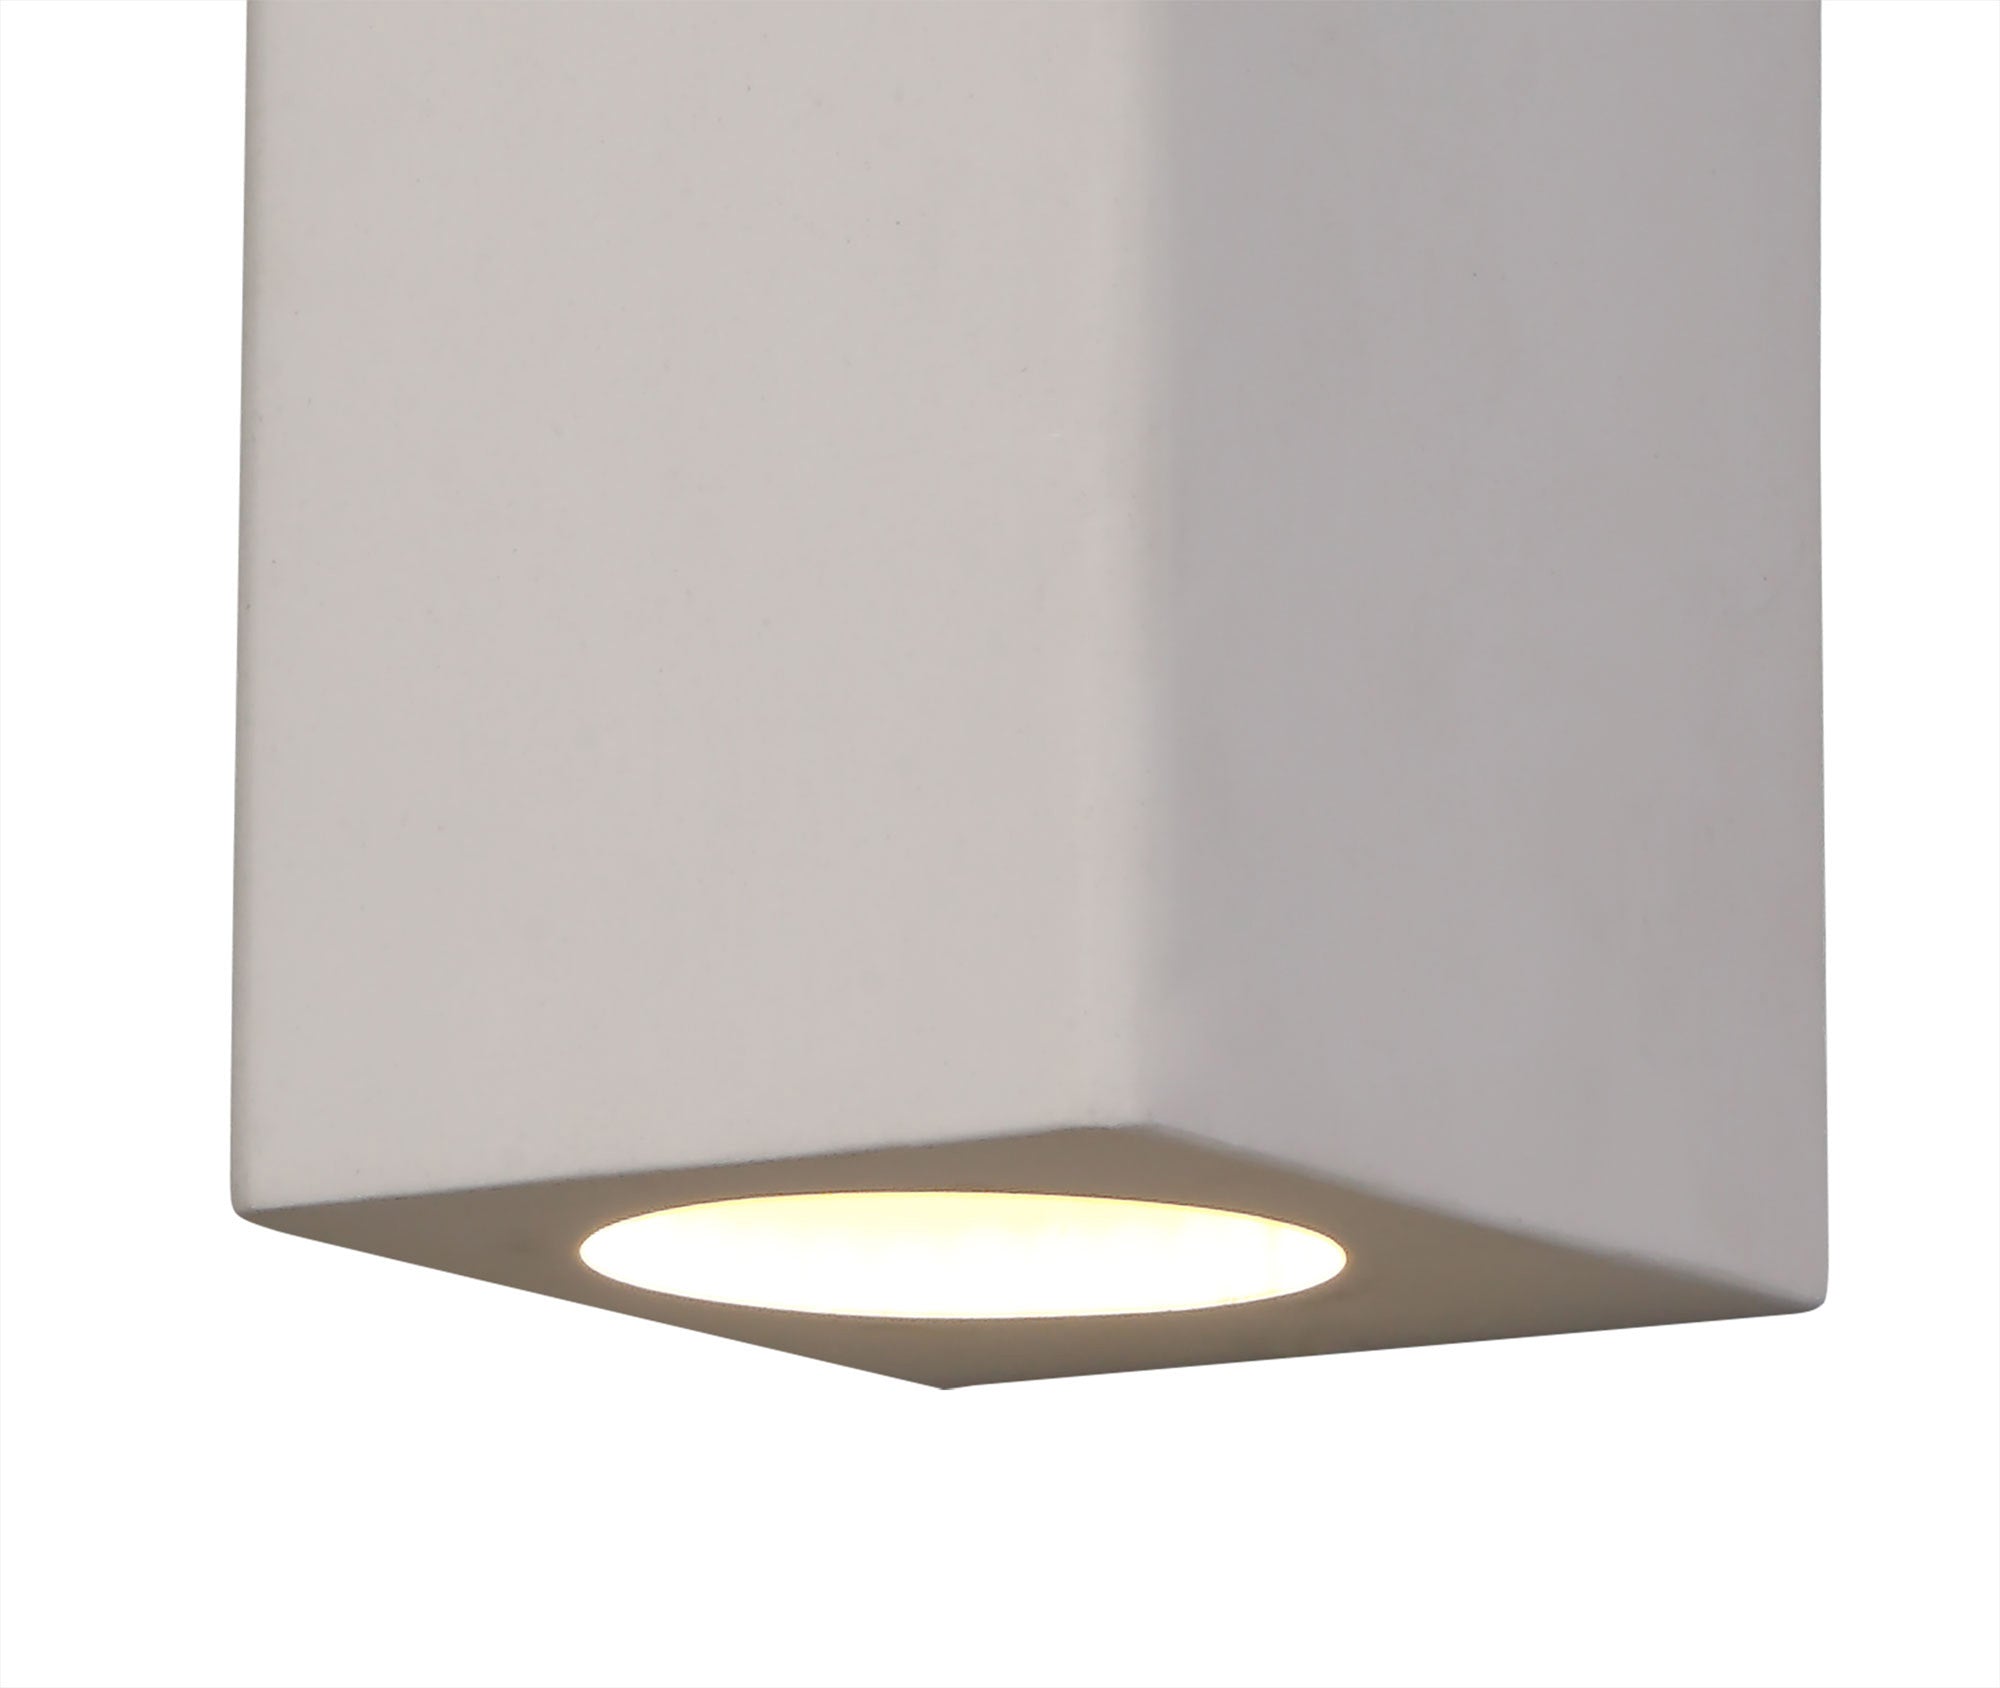 Alina Rectangular/Cylinder Up & Down Wall Lamp, 2 x GU10, White Paintable Gypsum